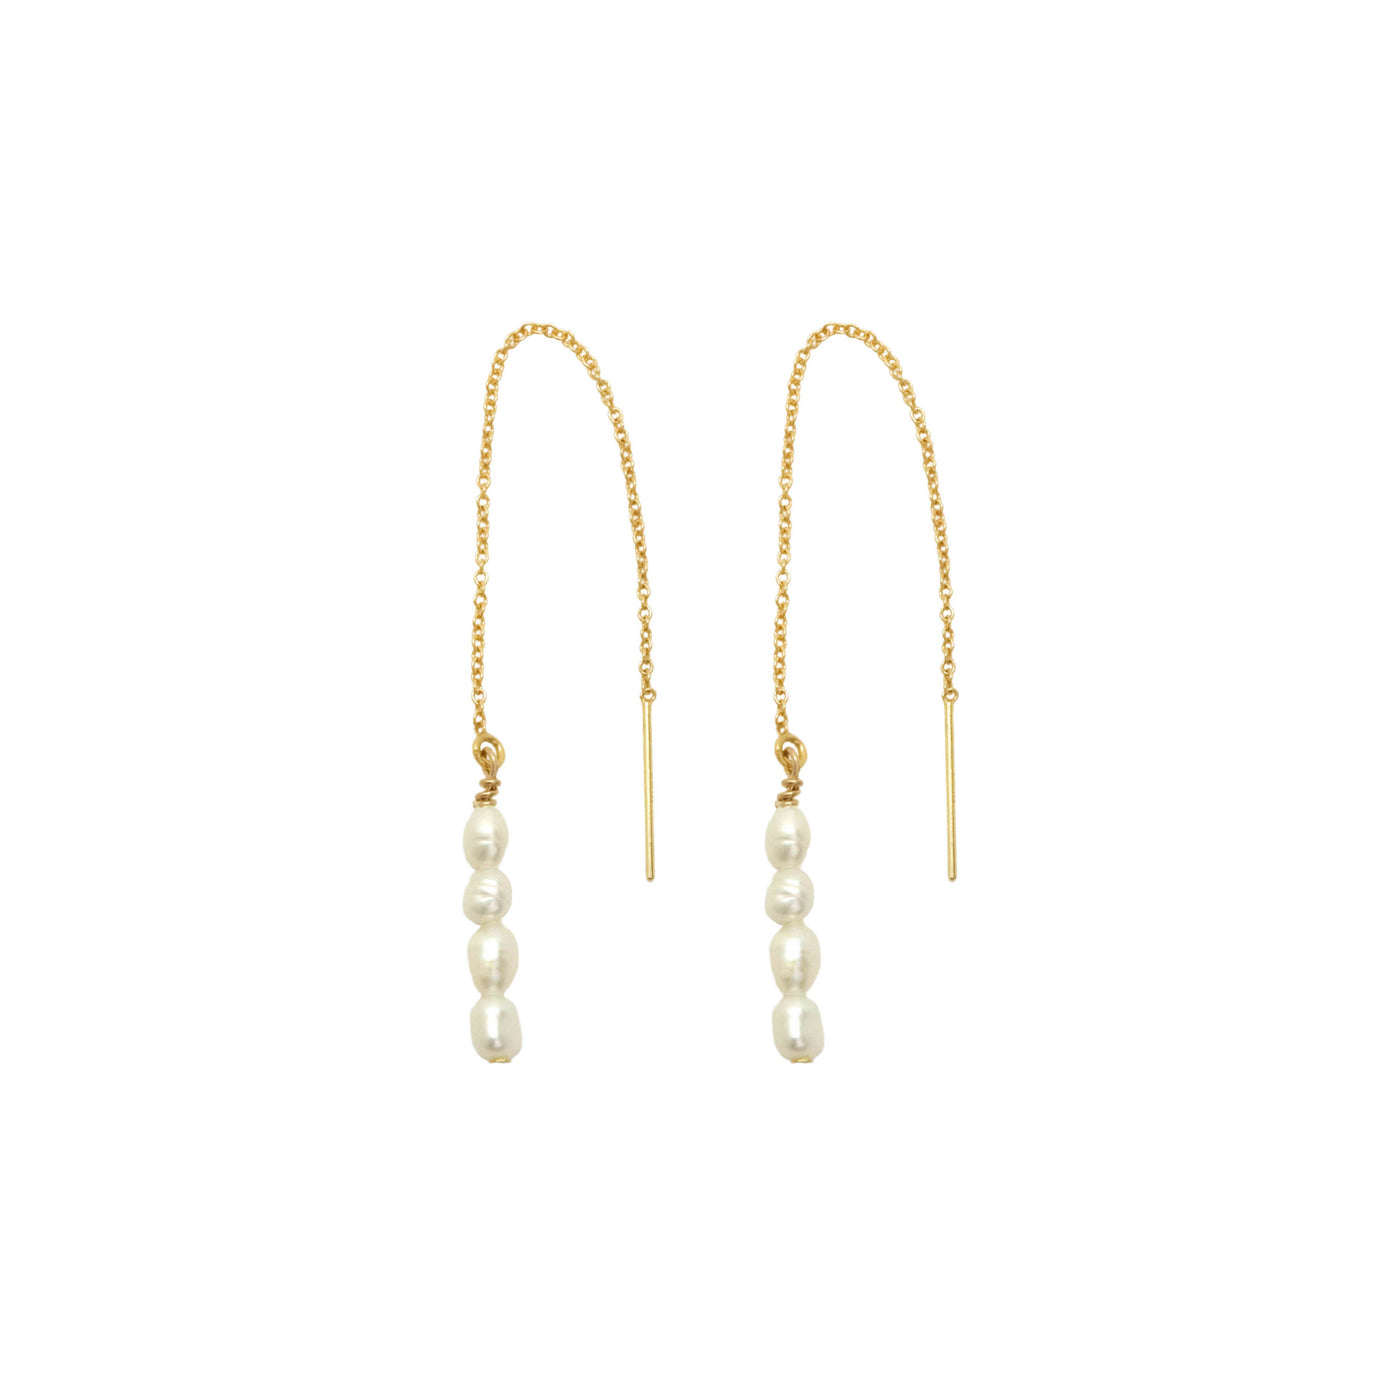 Freshwater pearl threader earrings